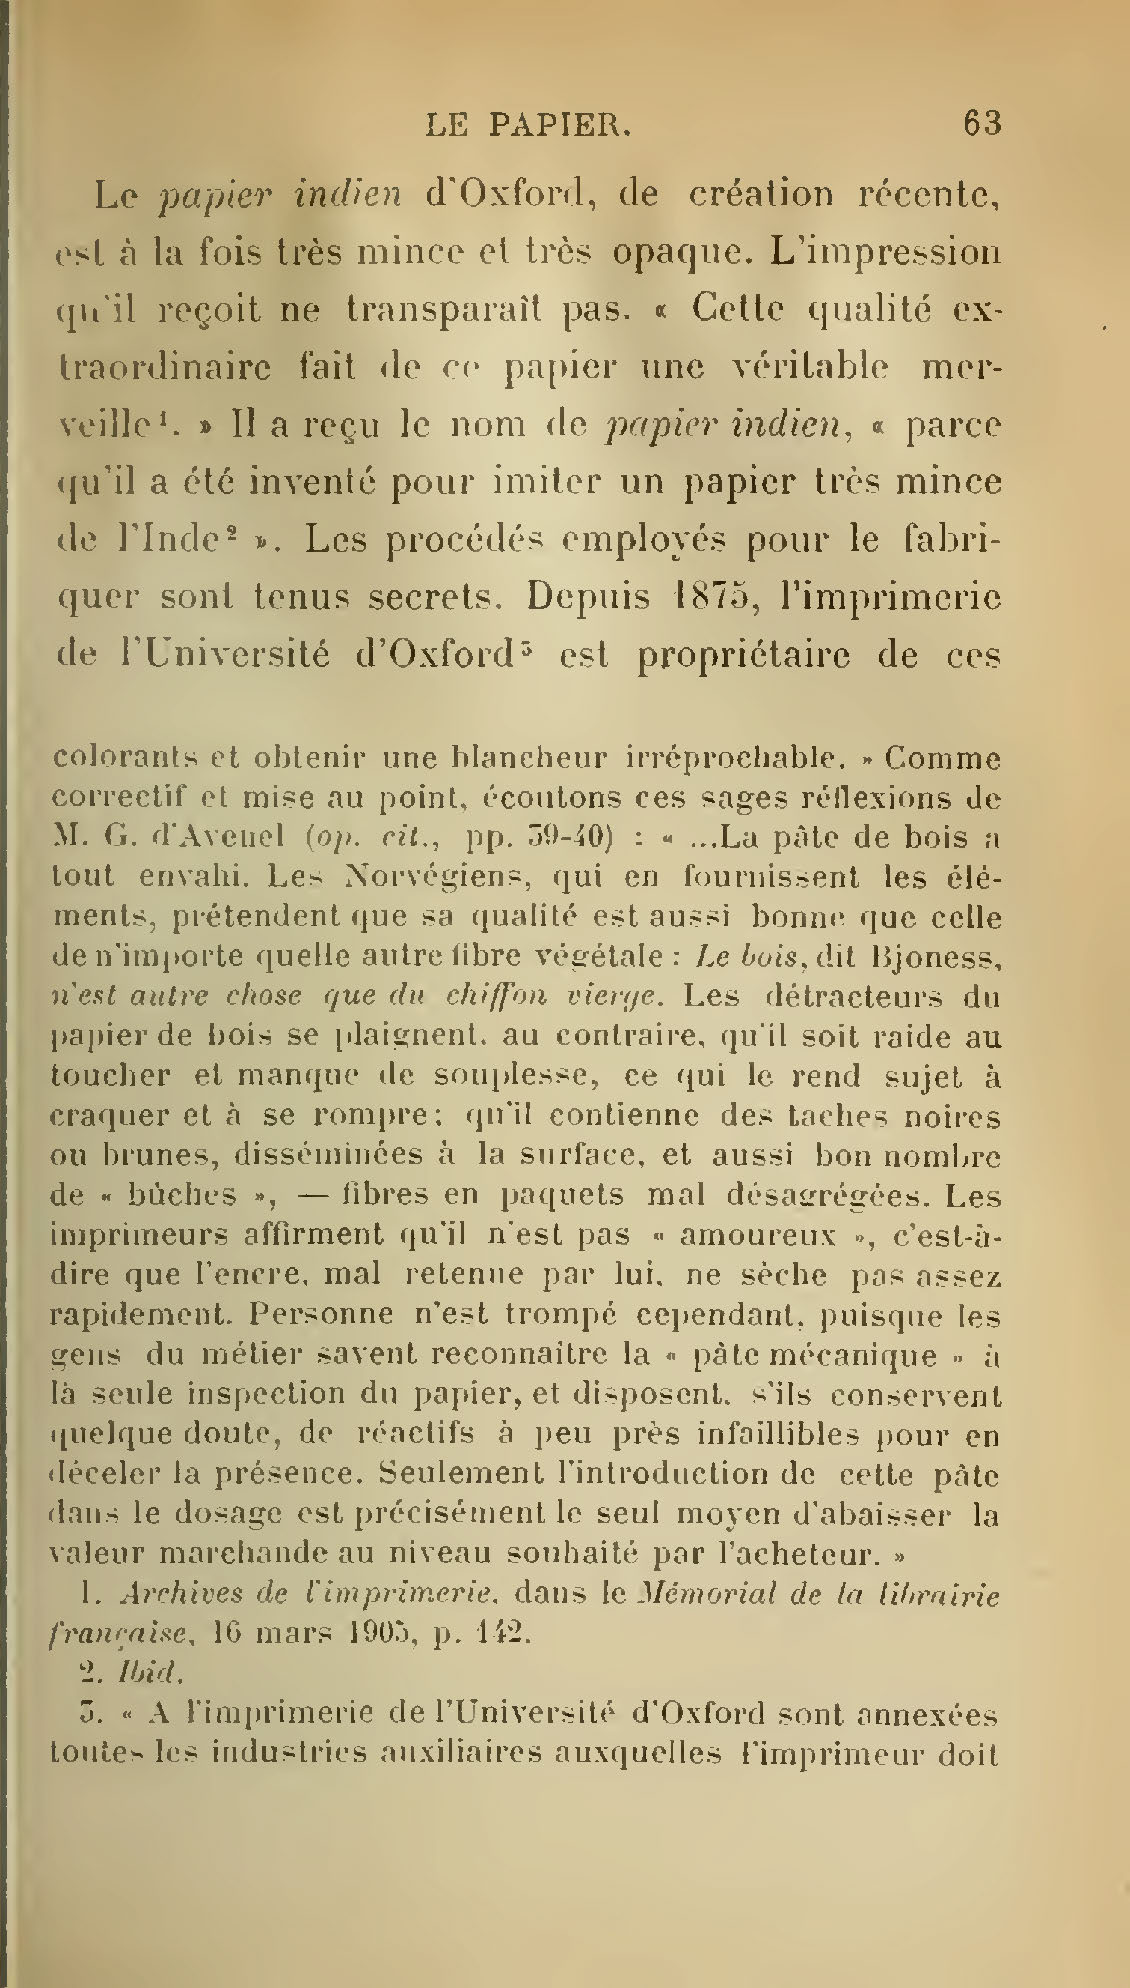 Albert Cim, Le Livre, t. III, p. 63.